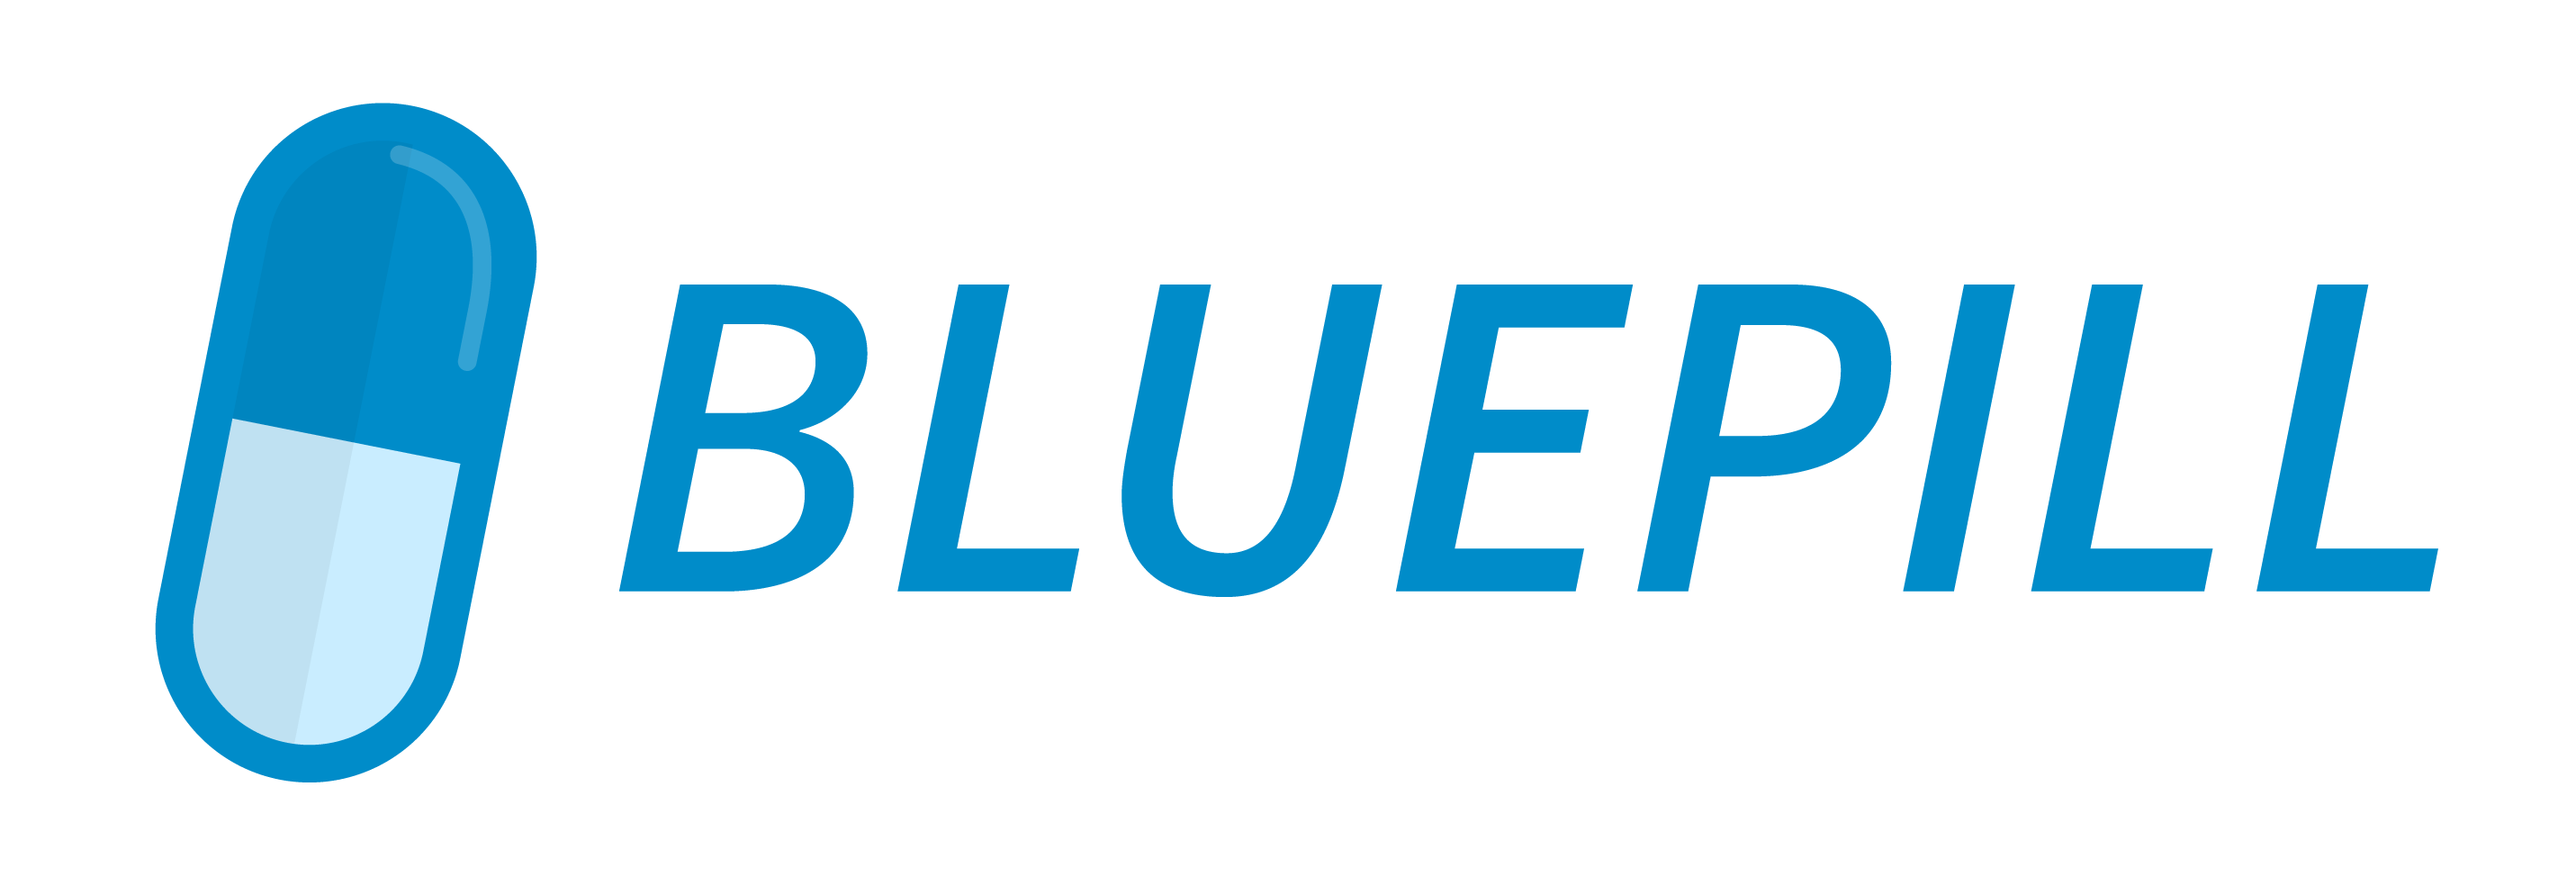 bluepill_text.png